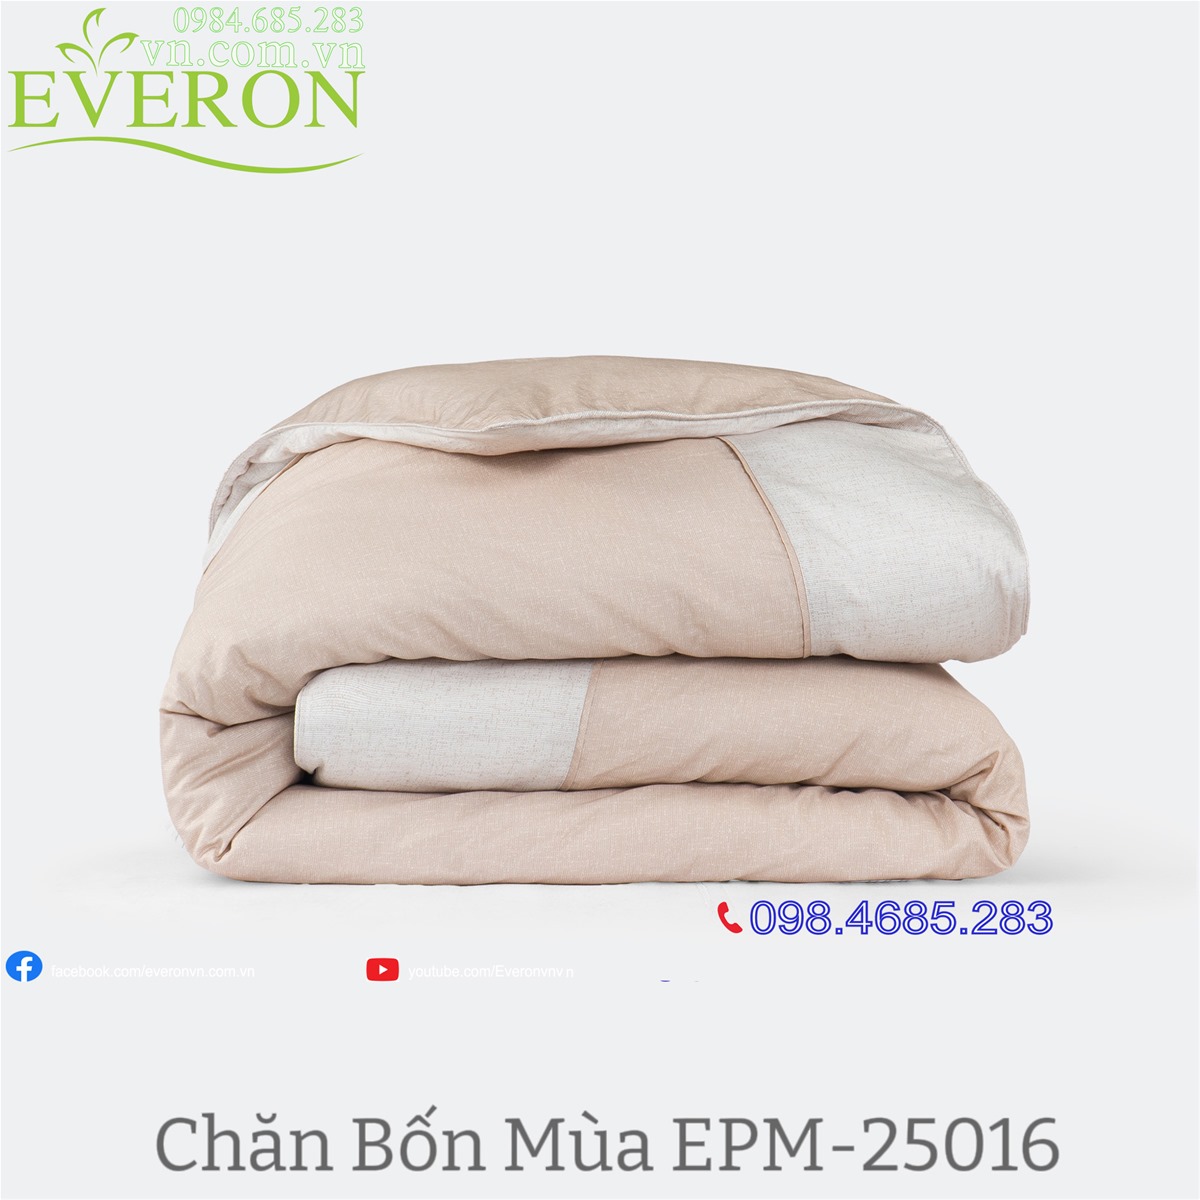 Bộ Chăn Ga Gối Everon EPM-25016